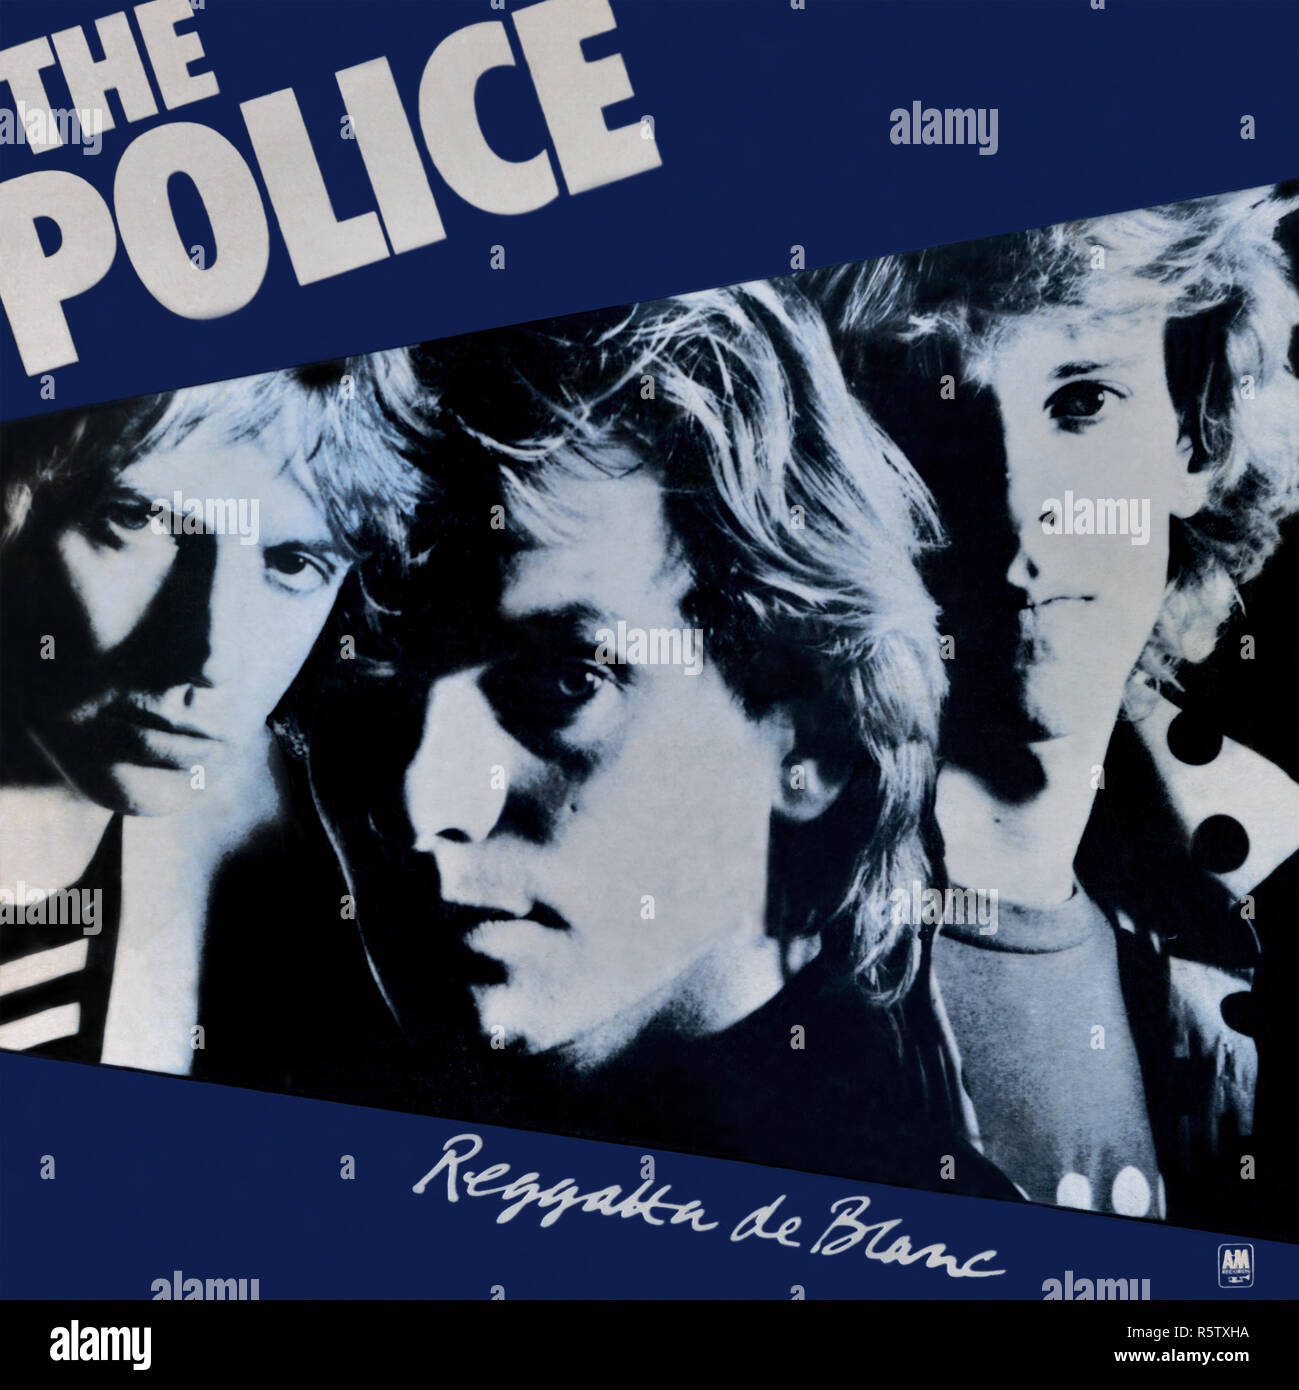 The Police - original vinyl album cover - Reggatta de Blanc - 1979 Stock Photo